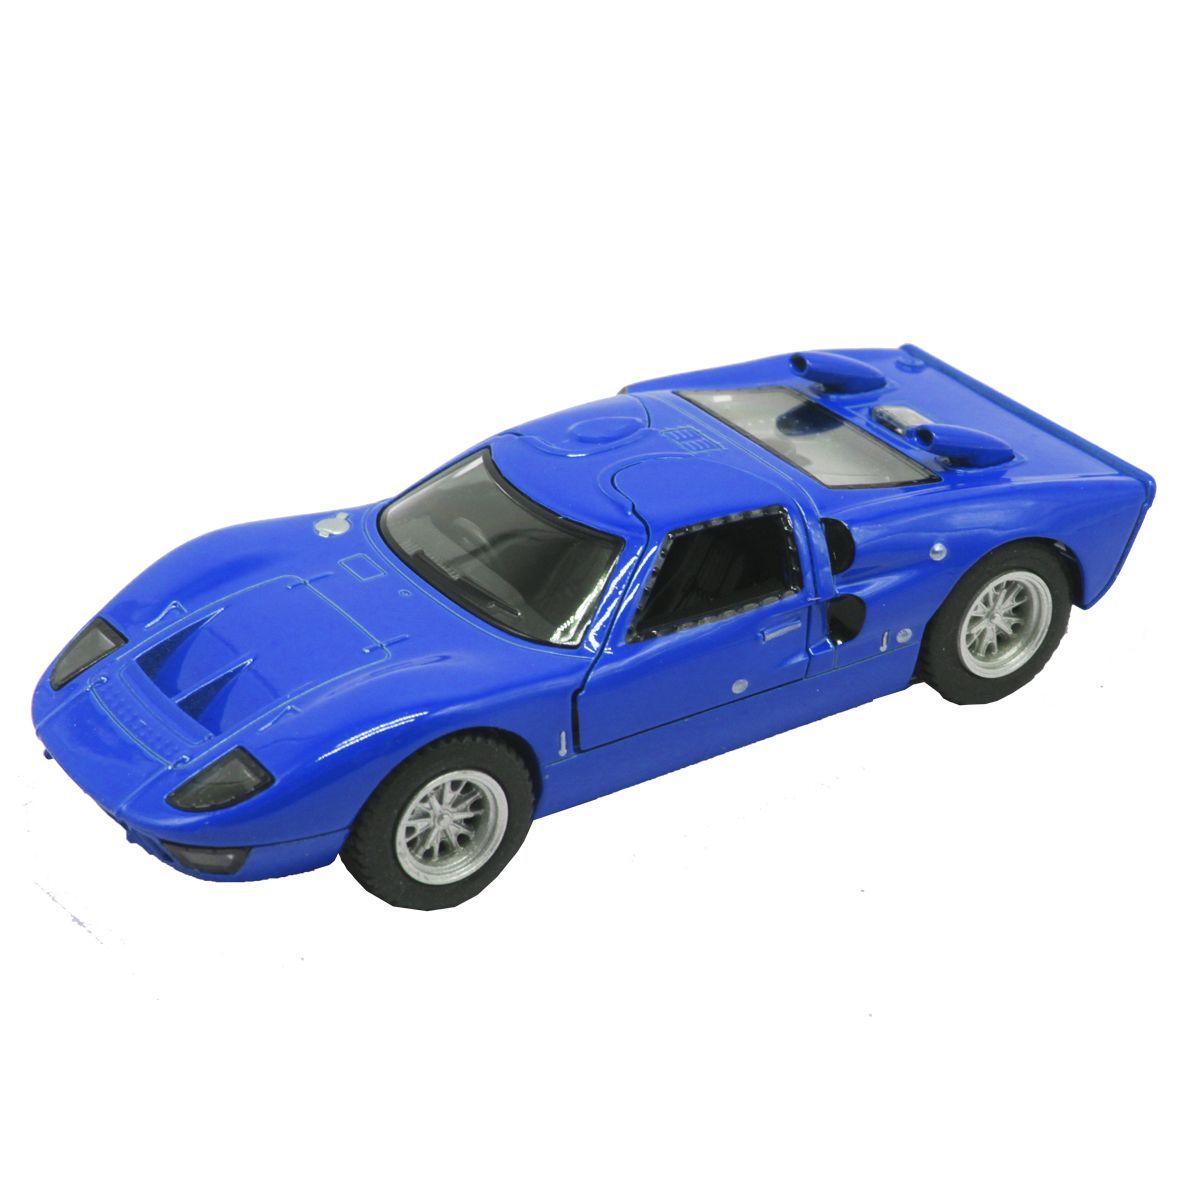 Машинка металлическая "FORD GT40 MKII 1966", синий